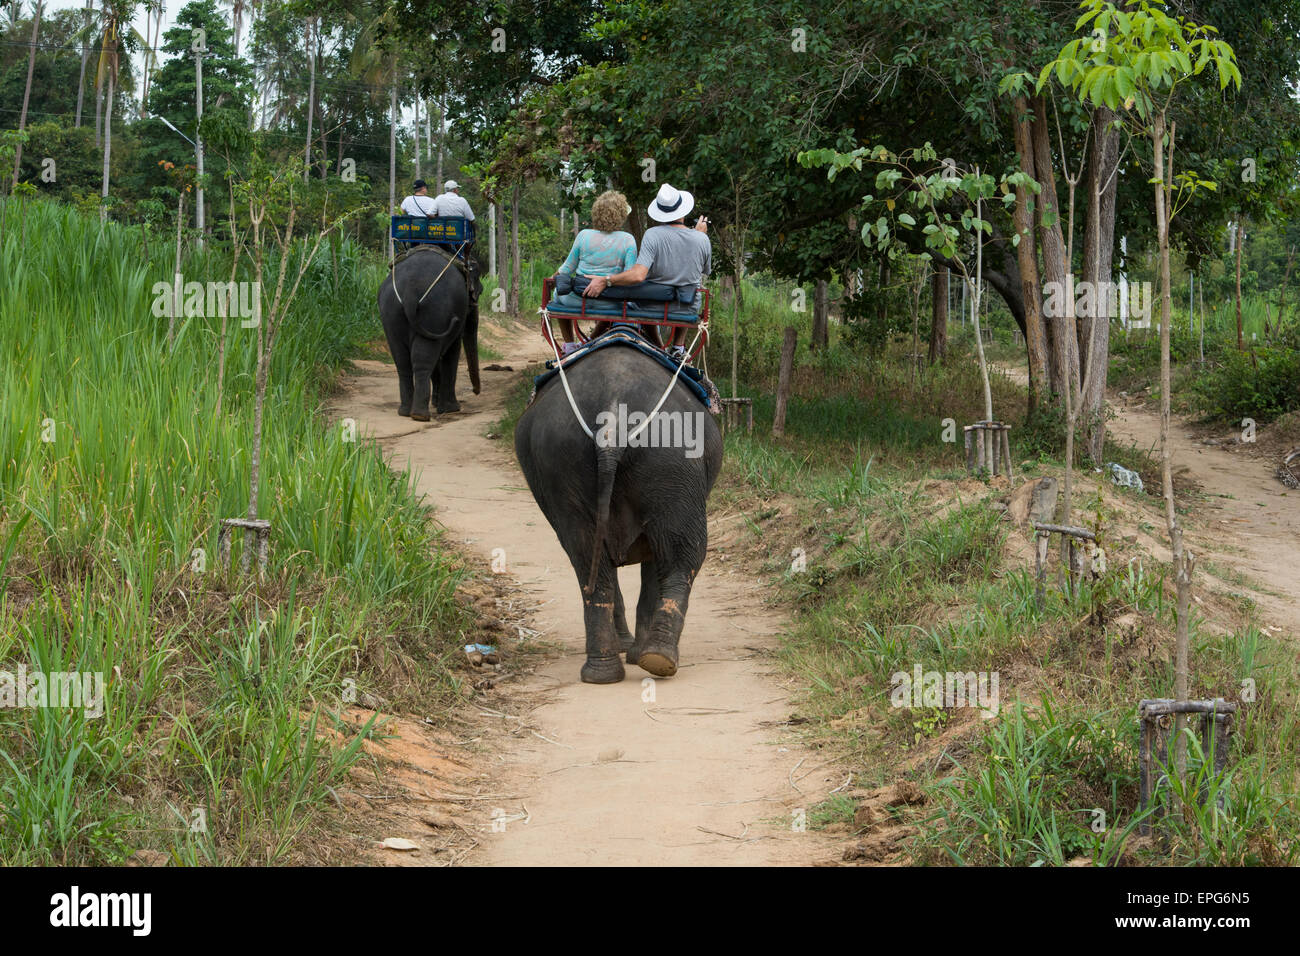 Thailand, Samui Island, Ko Samui. Typical tourist elephant ride in the jungle. Stock Photo